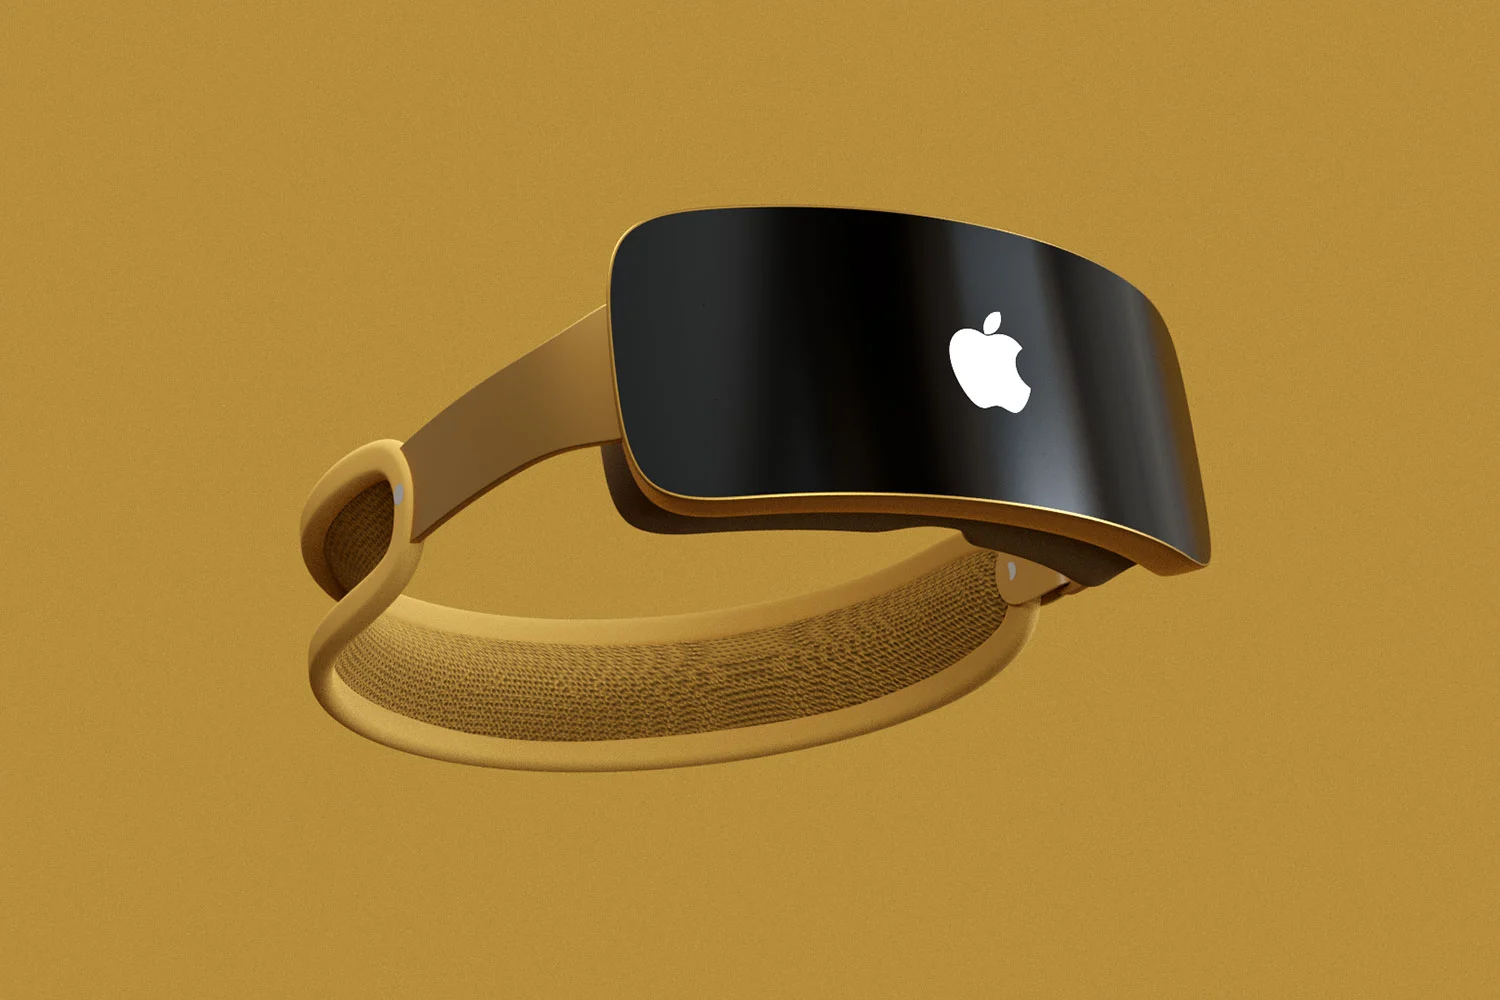 Apple's mixed reality headset